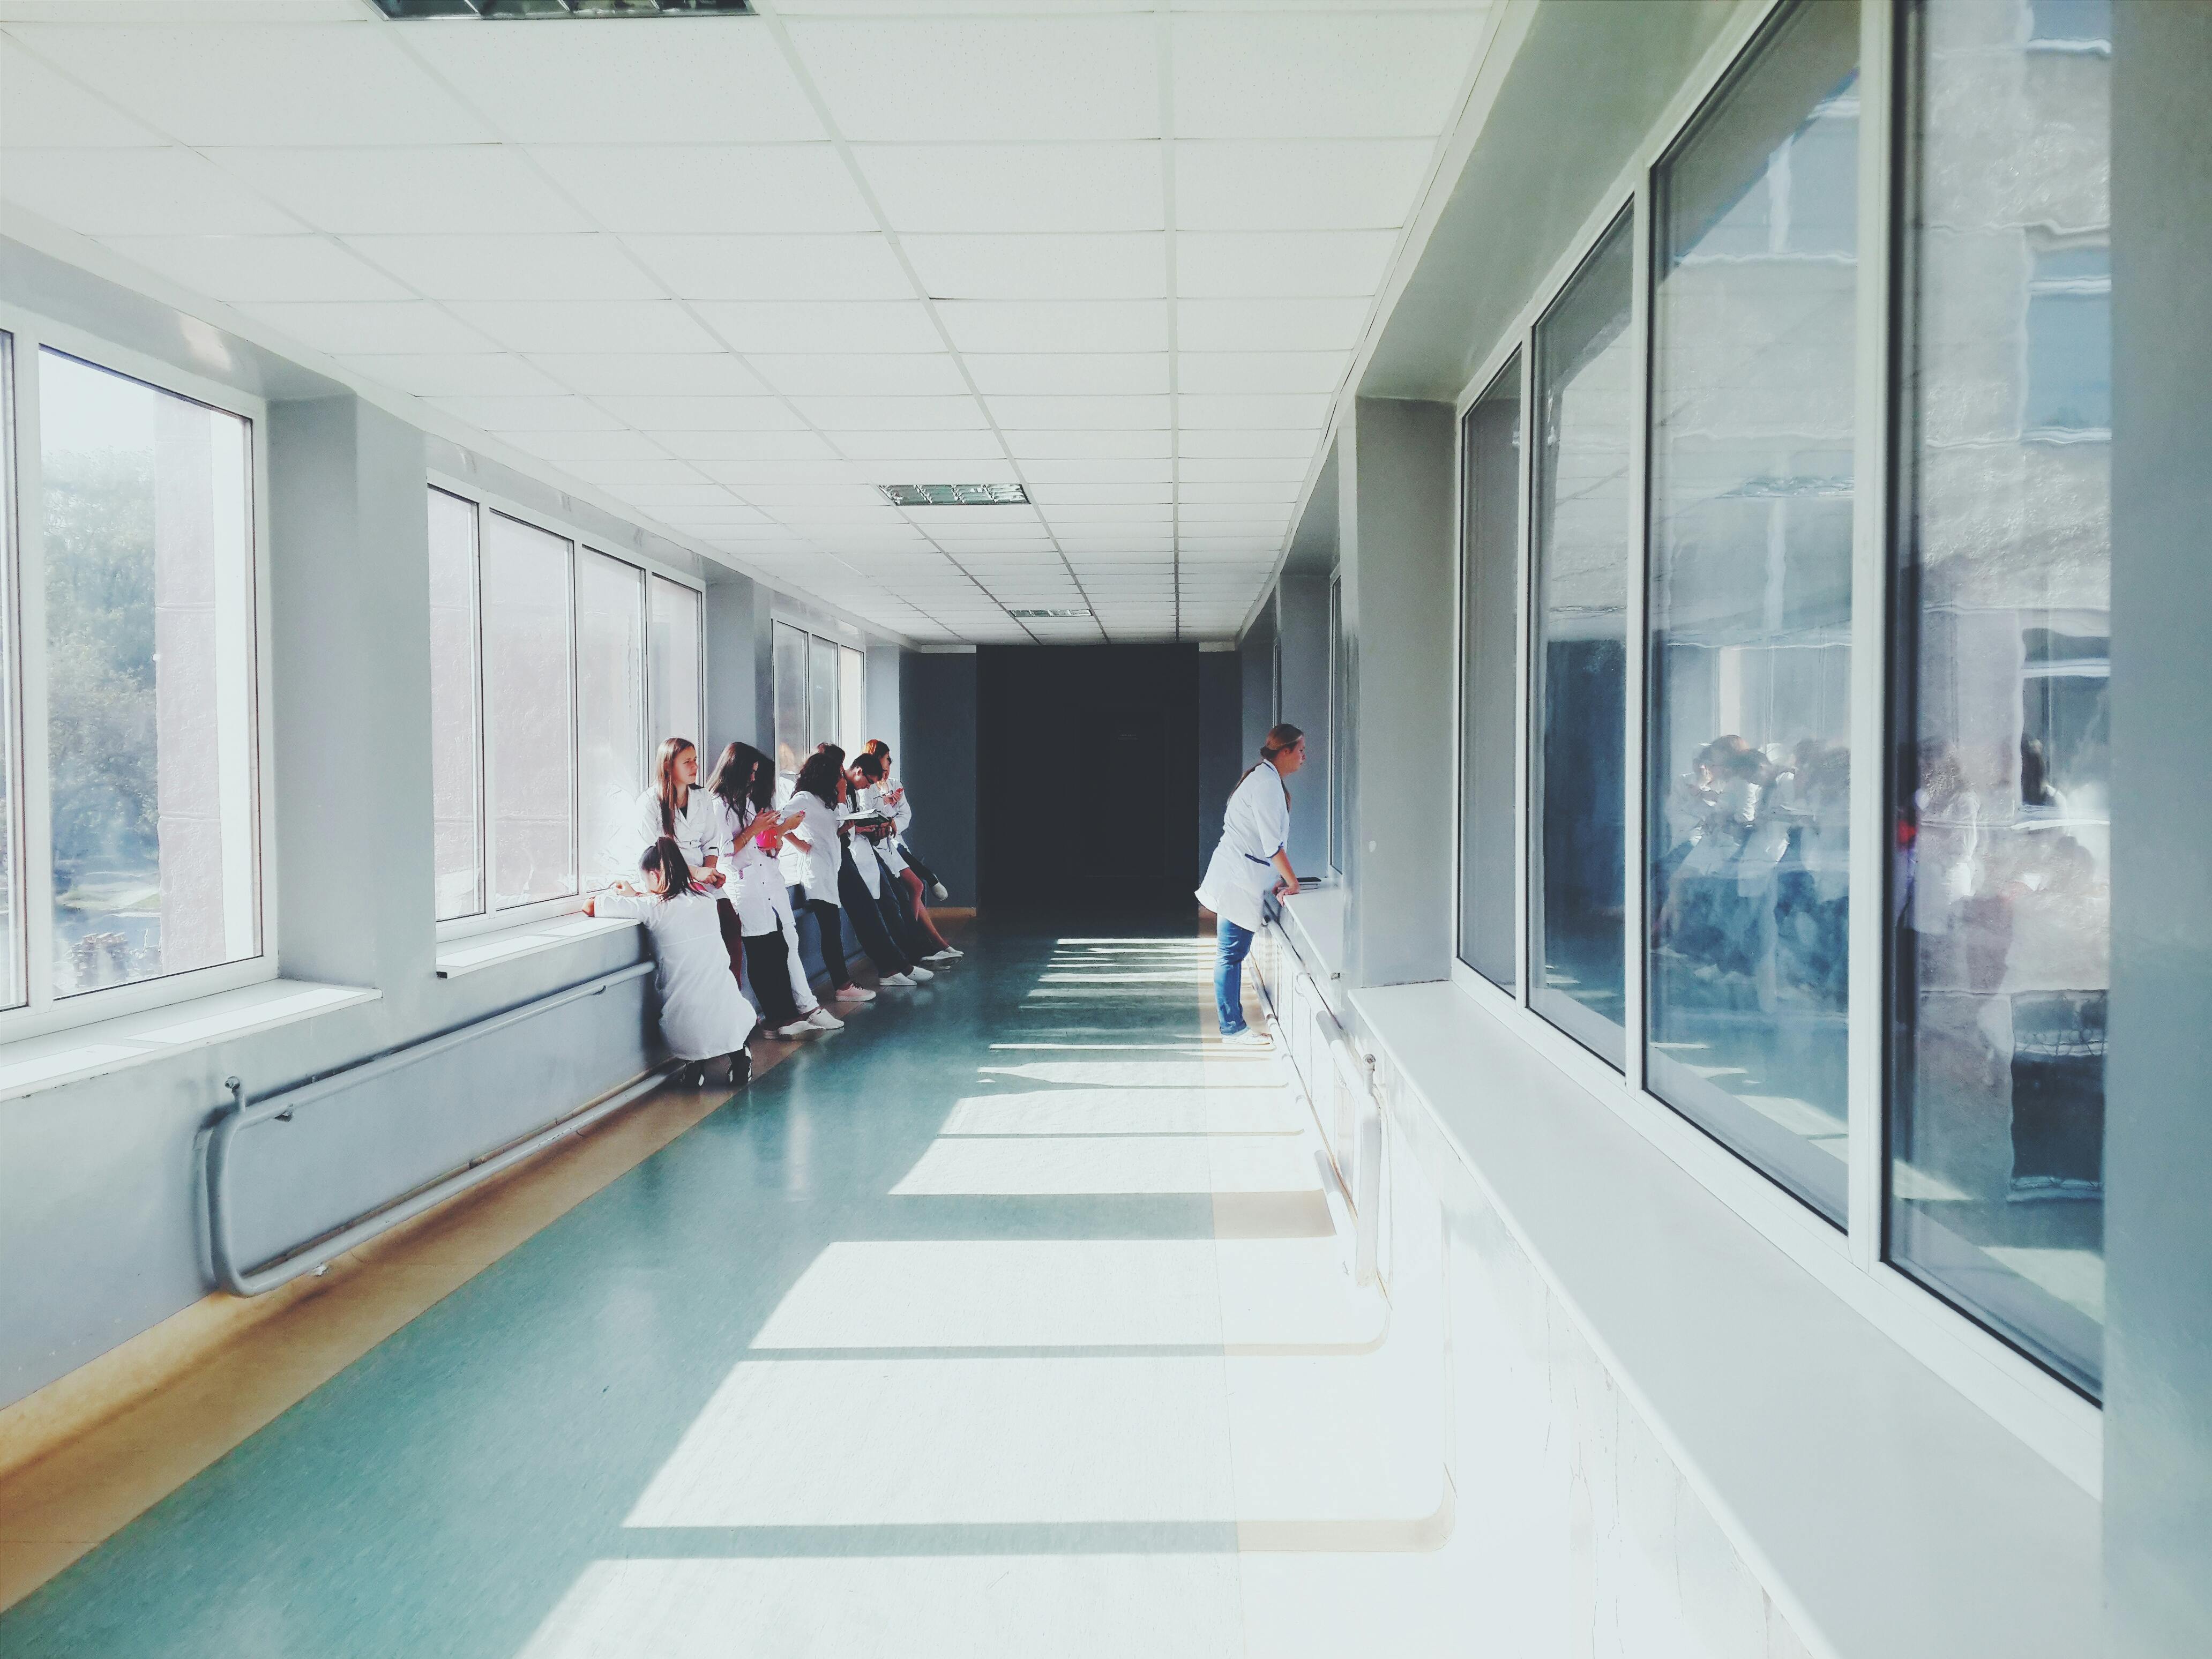 Couloir d'un hôpital. | Photo : Pexel